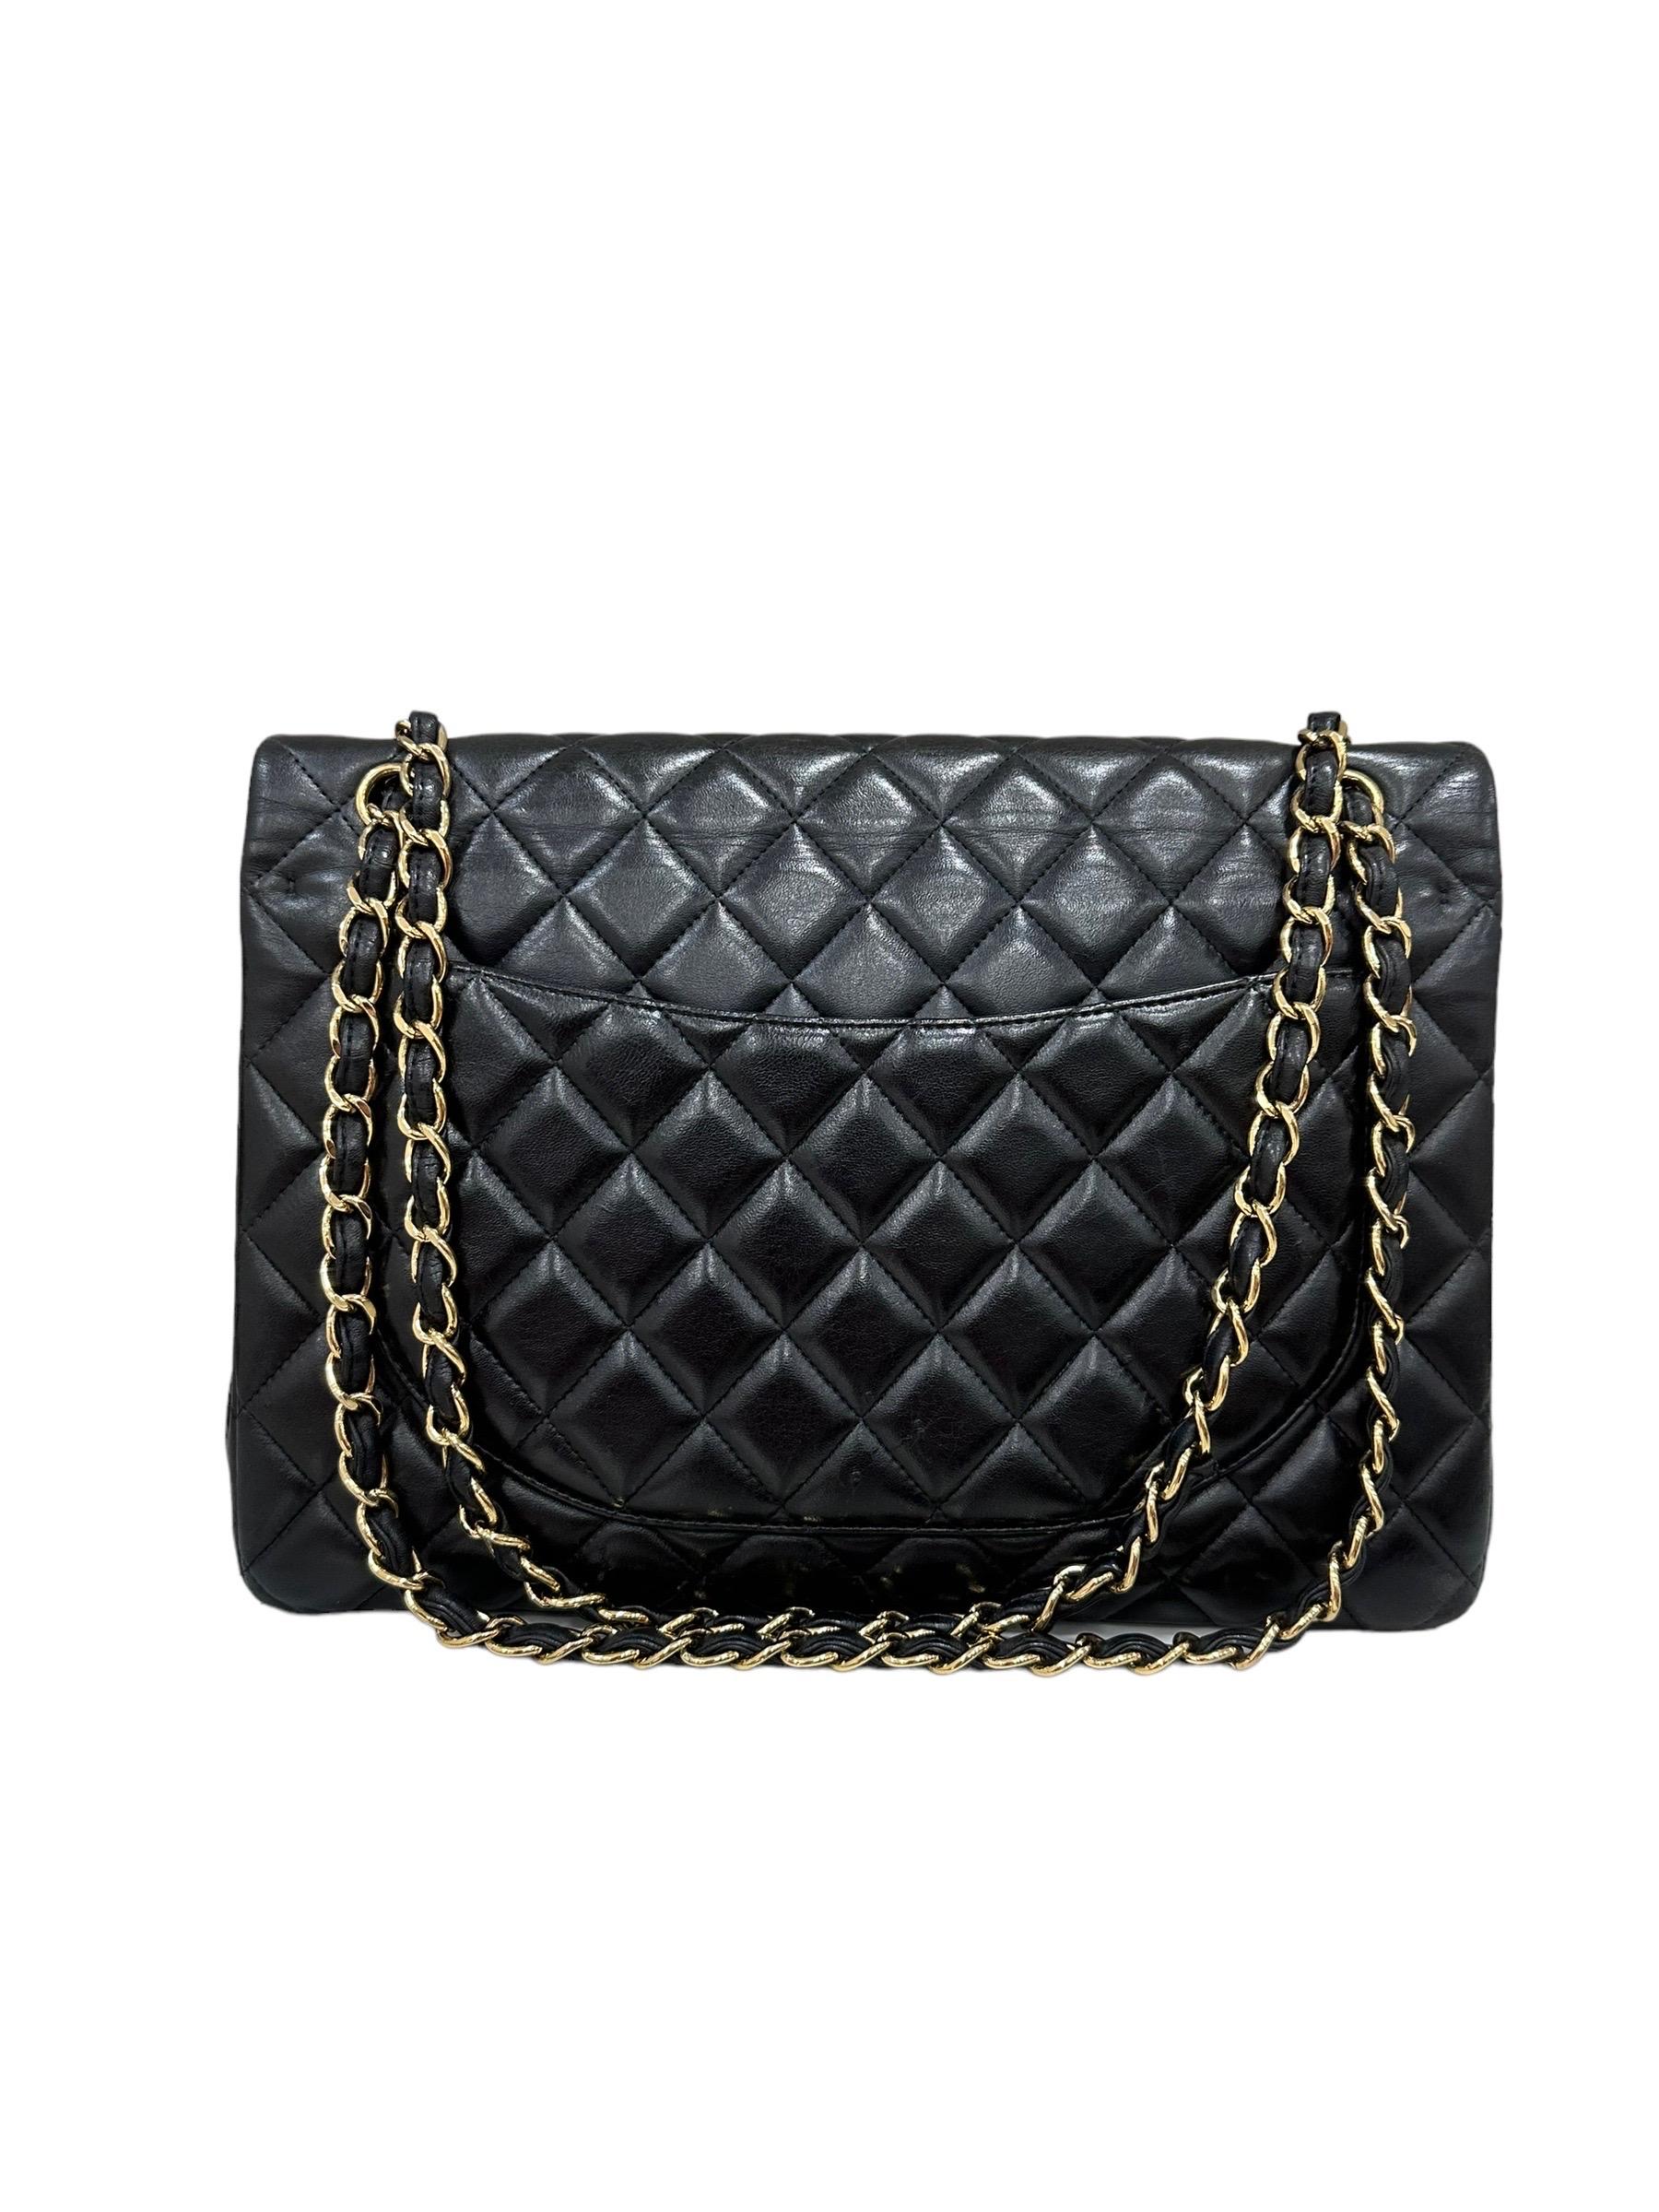 Women's or Men's 2011 Chanel Timeless Maxi Jumbo Black Leather Top Shoulder Bag